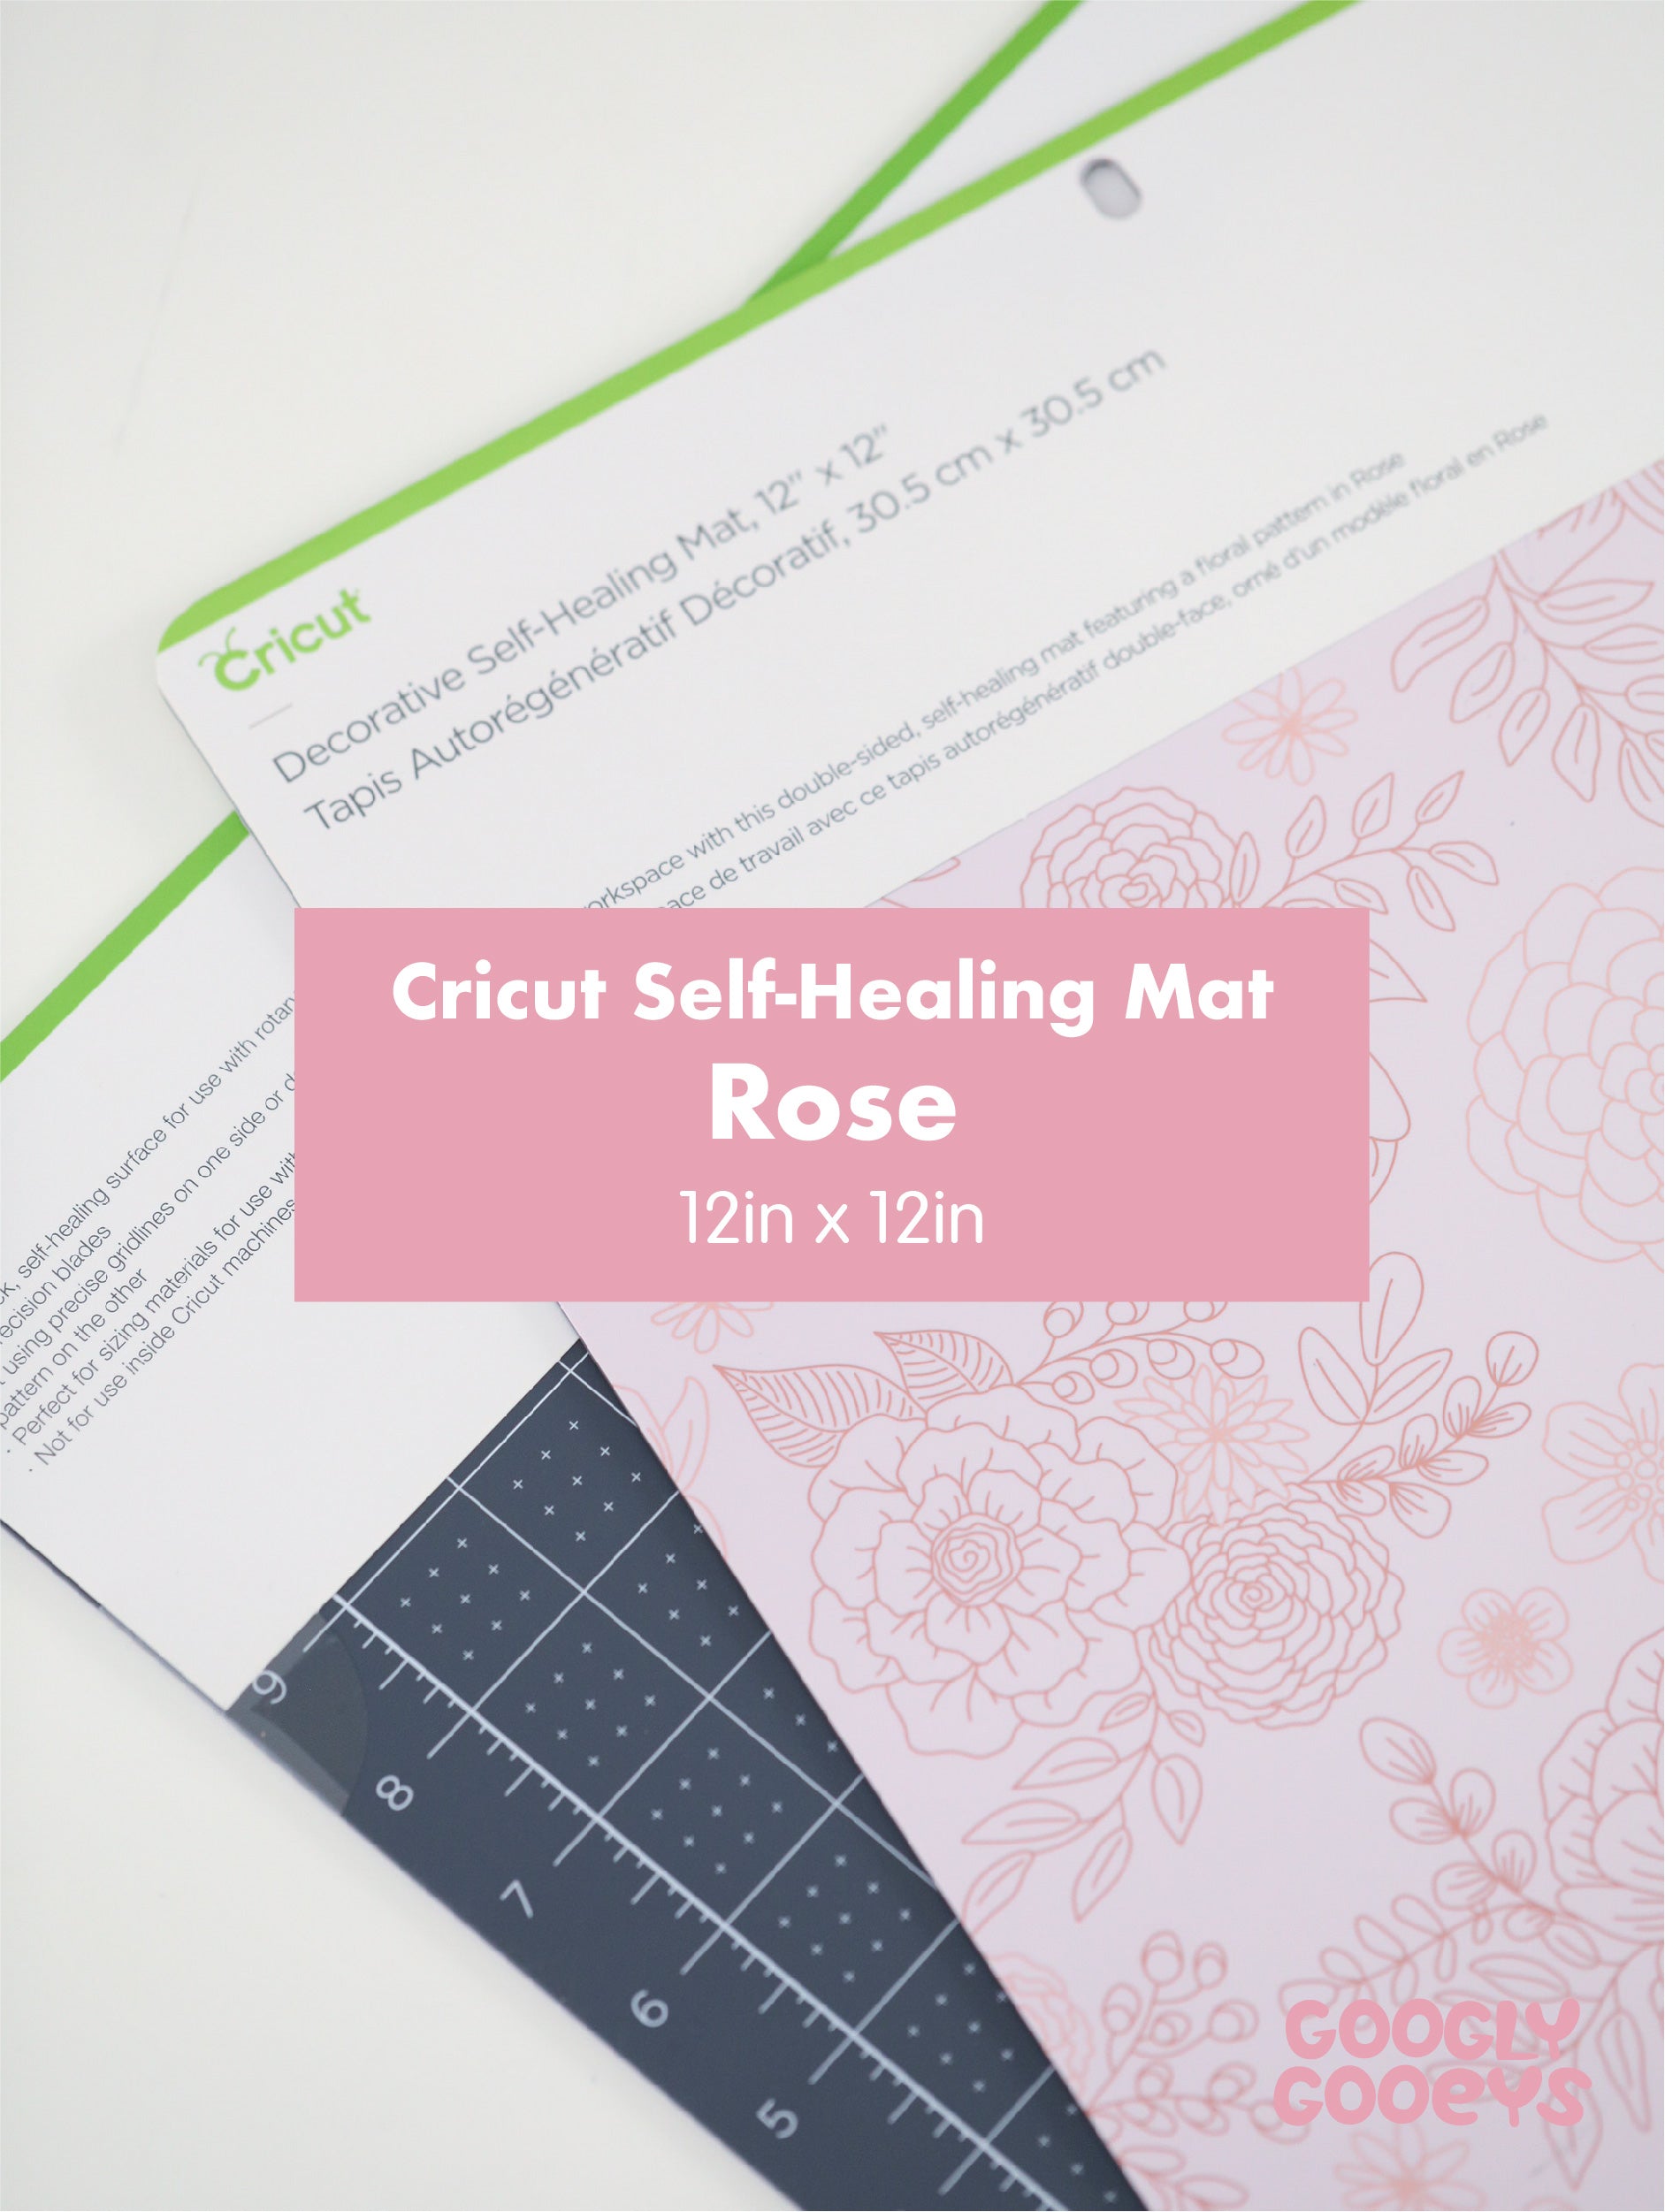 Cricut Rose Decorative Self Healing Mat 12x12 for Crafting DIY Projects